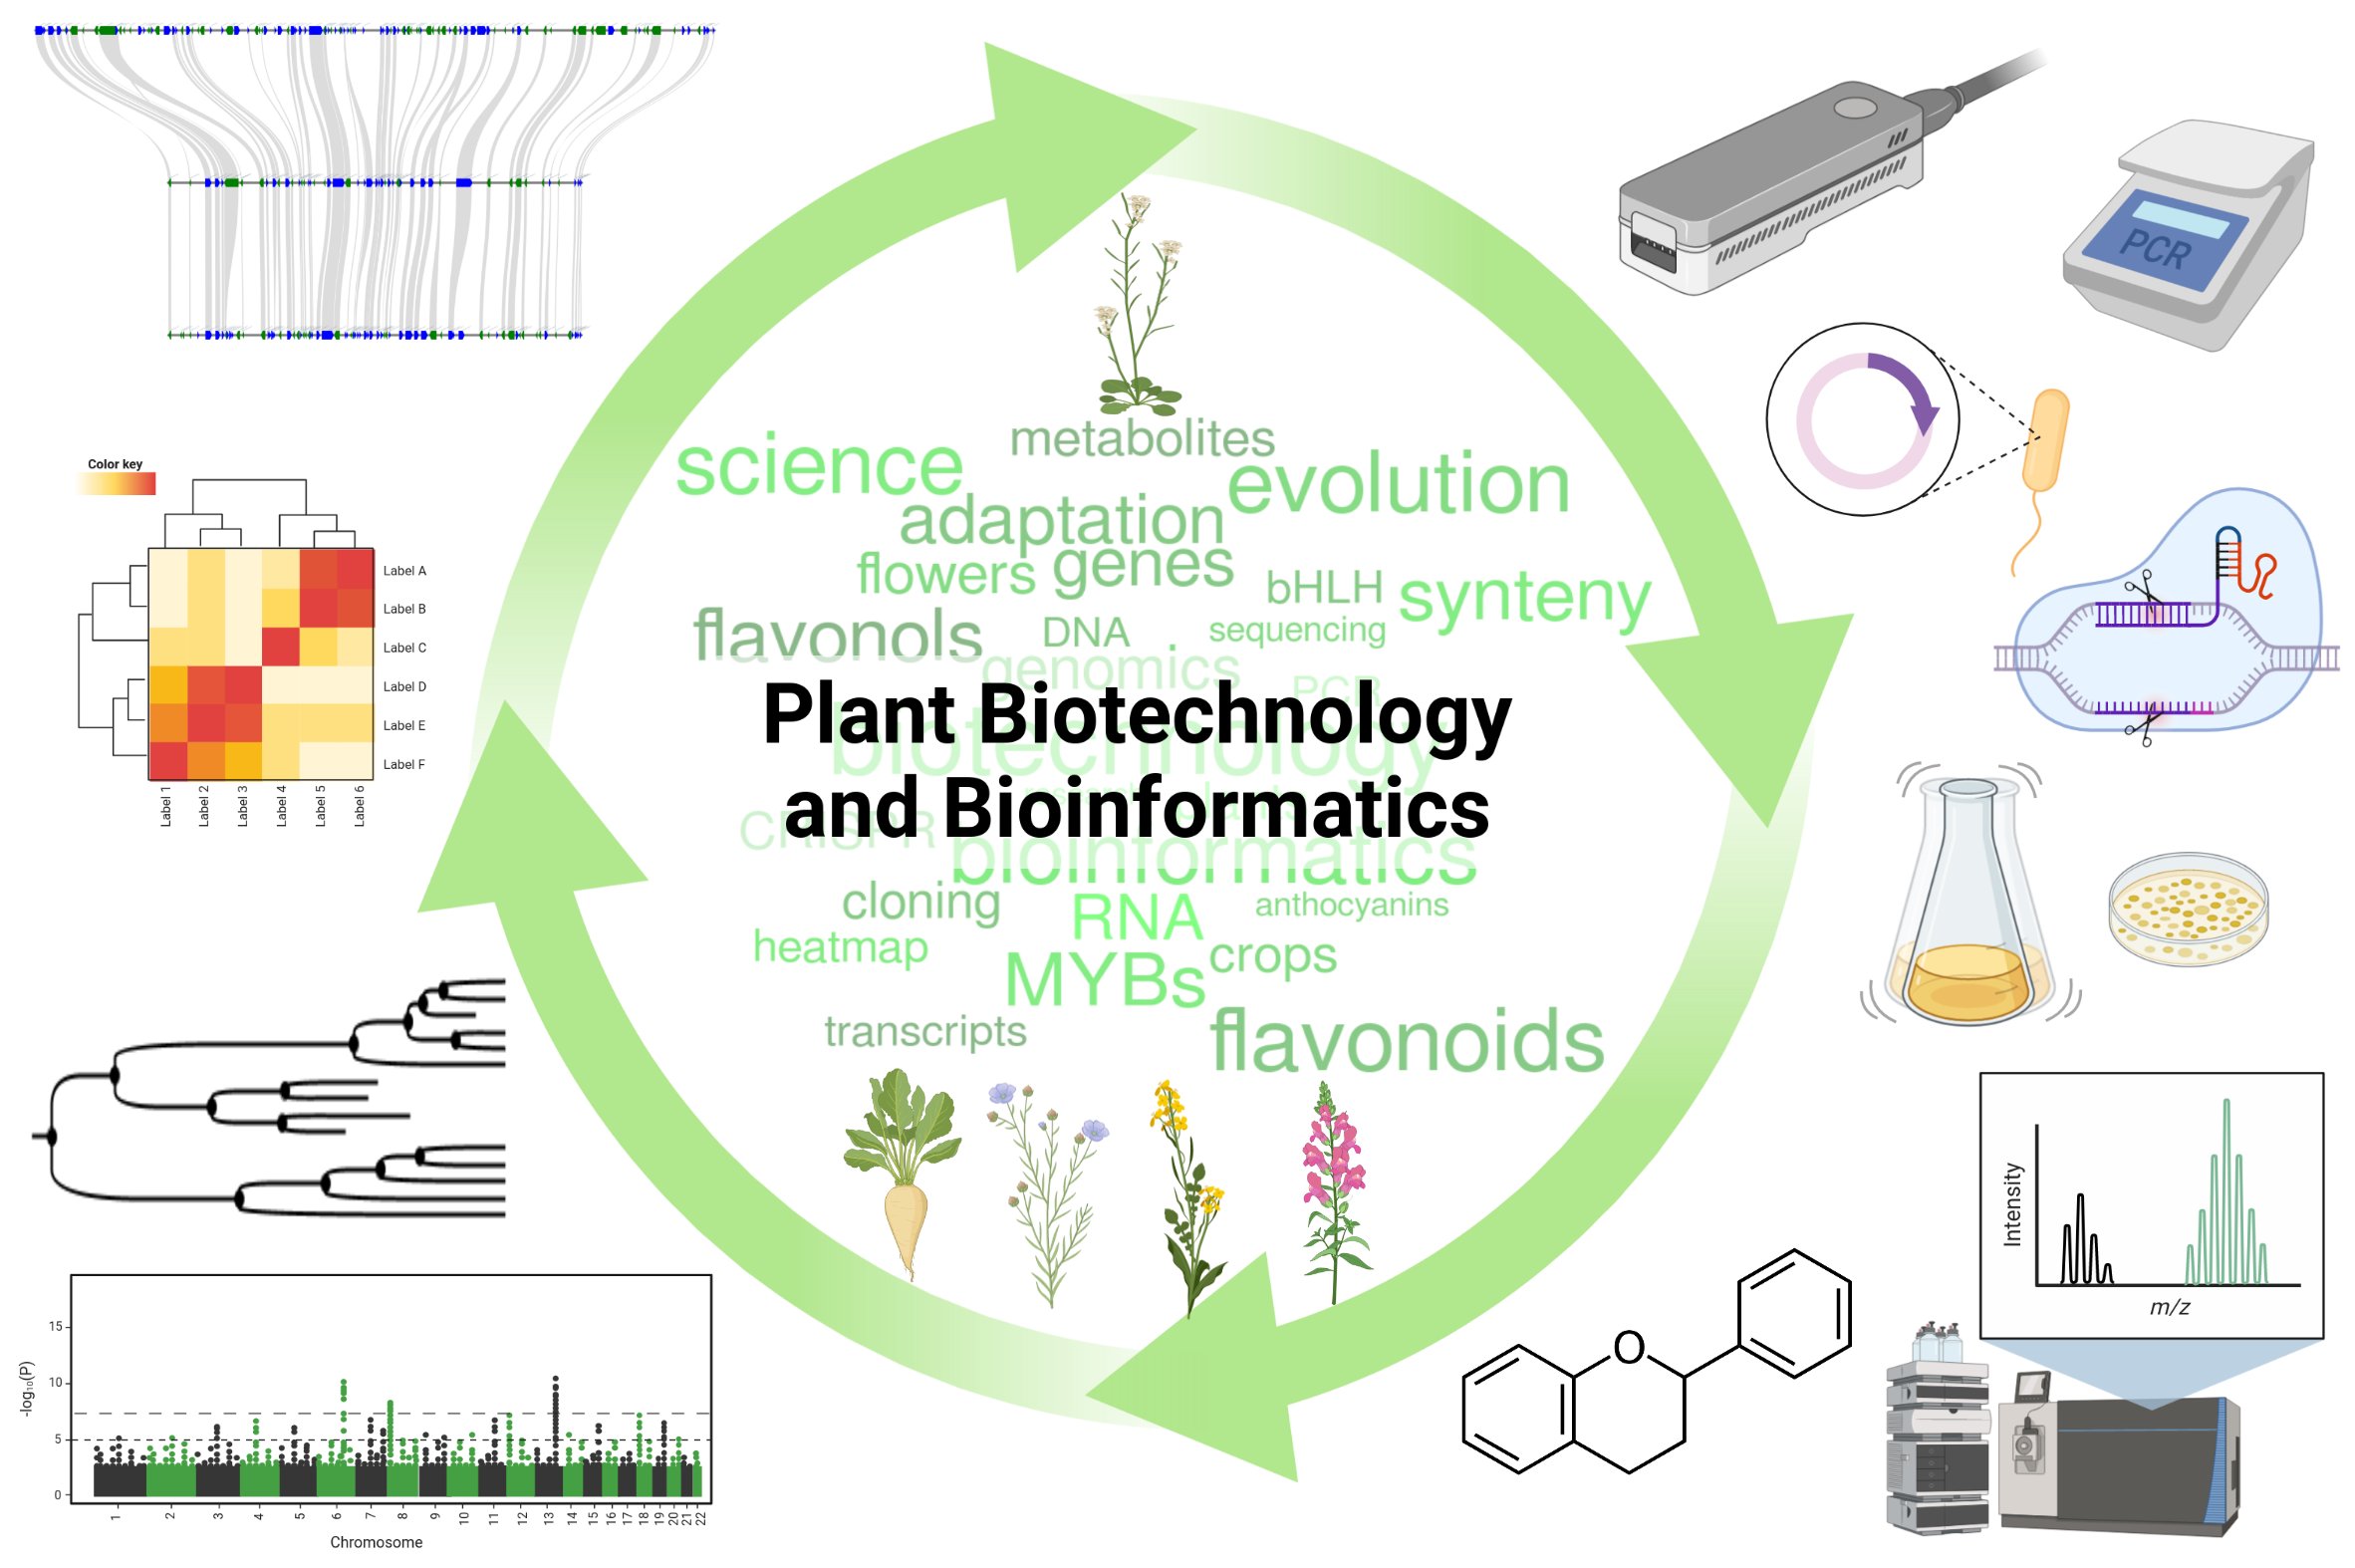 Plant Biotechnology and Bioinformatics (Tweet #31)